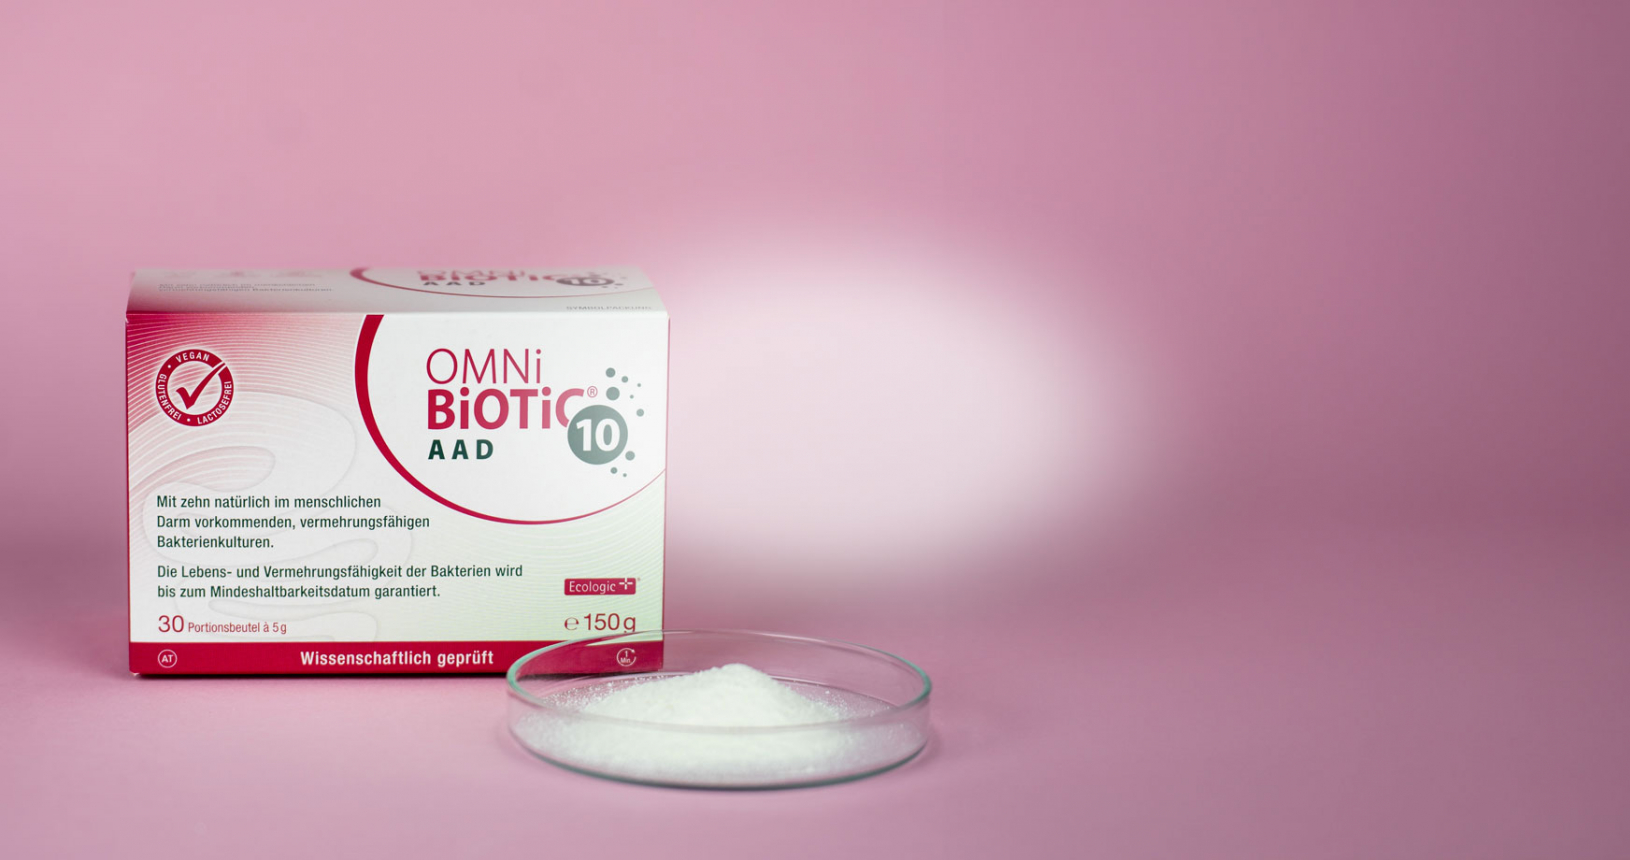 OMNi-BiOTiC 10 AAD: Antibiotikum? Darmflora ergänzen!